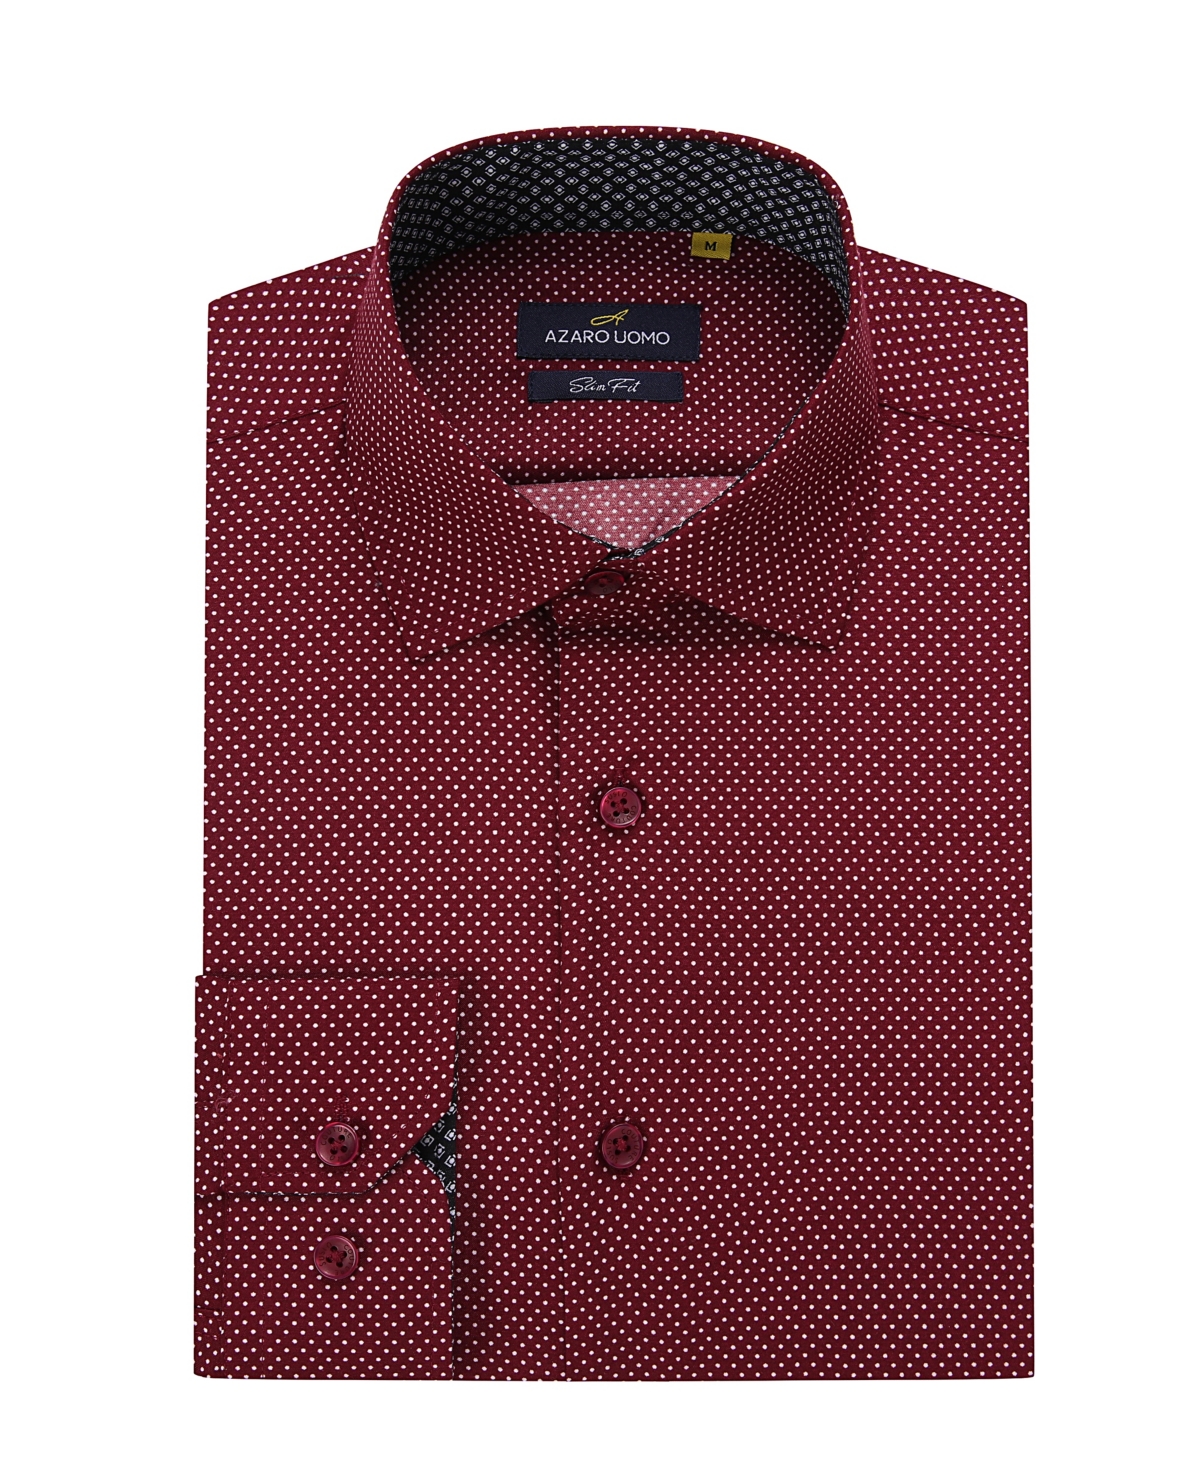 Azaro Uomo Men's Business Geometric Long Sleeve Button Down Shirt